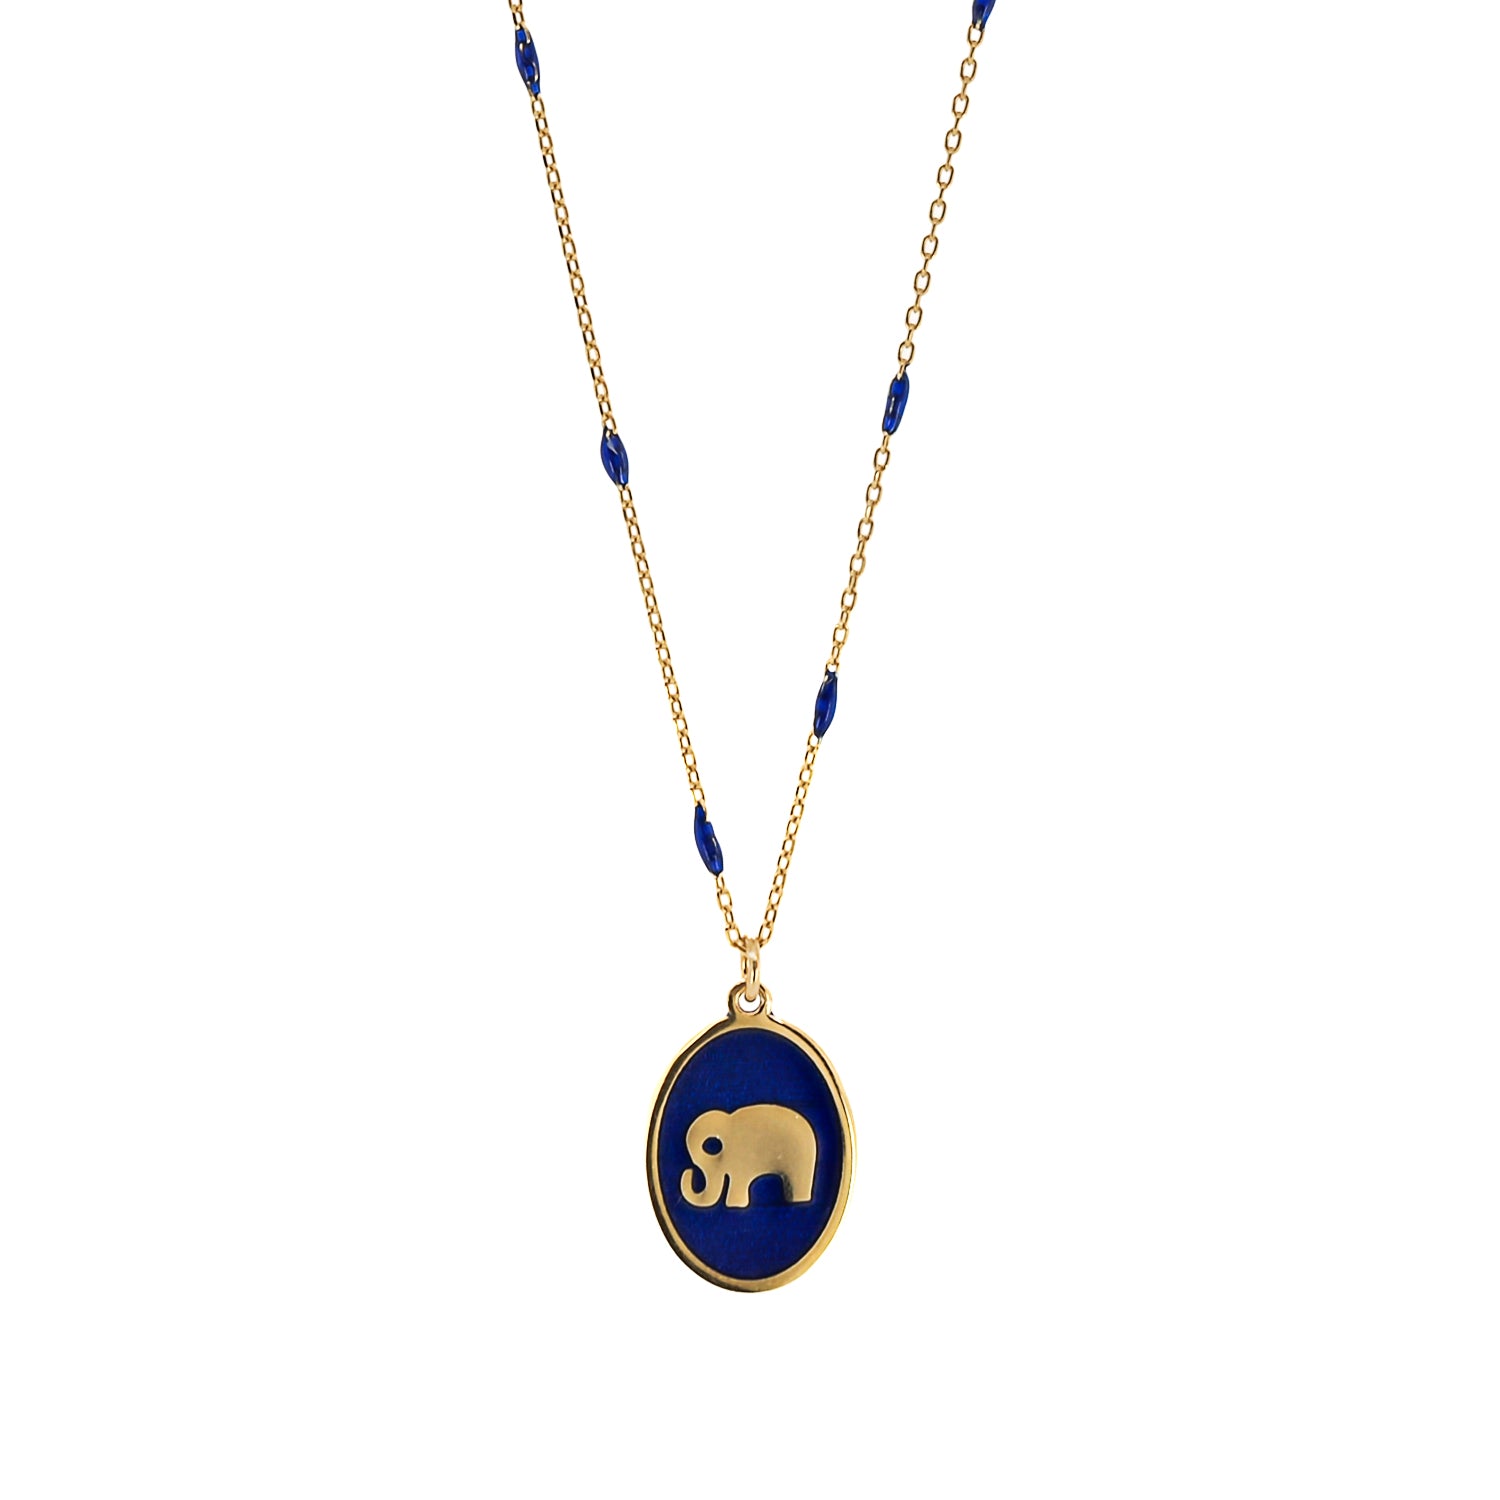 Blue Enamel Chain Spirit Elephant Necklace - A Symbol of Gentle Strength.